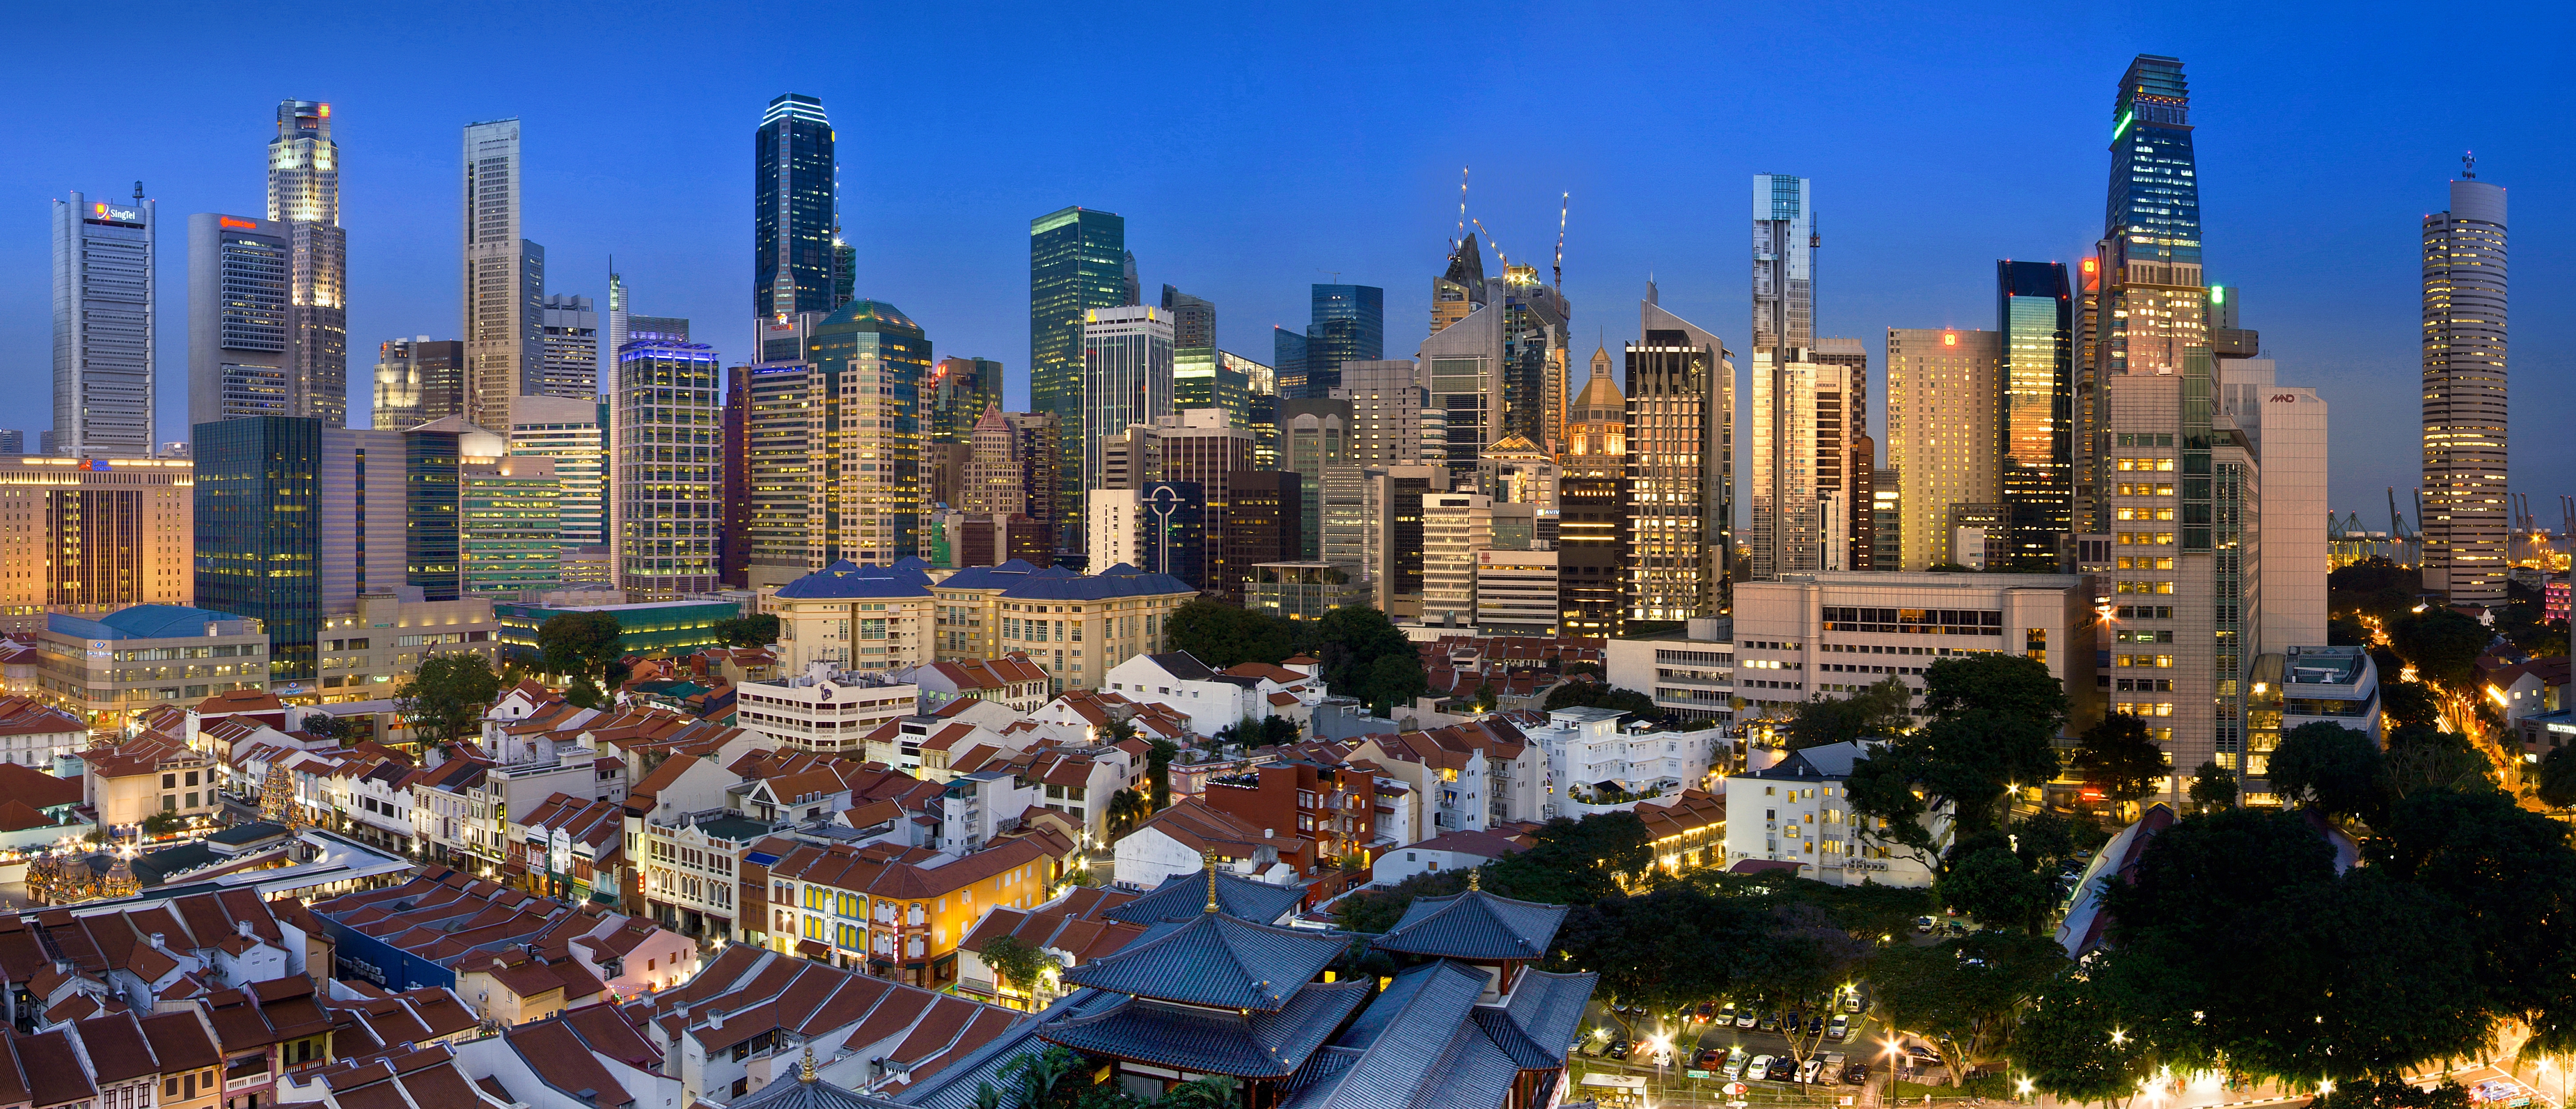 File:Singapore Panorama v2.jpg - Wikipedia